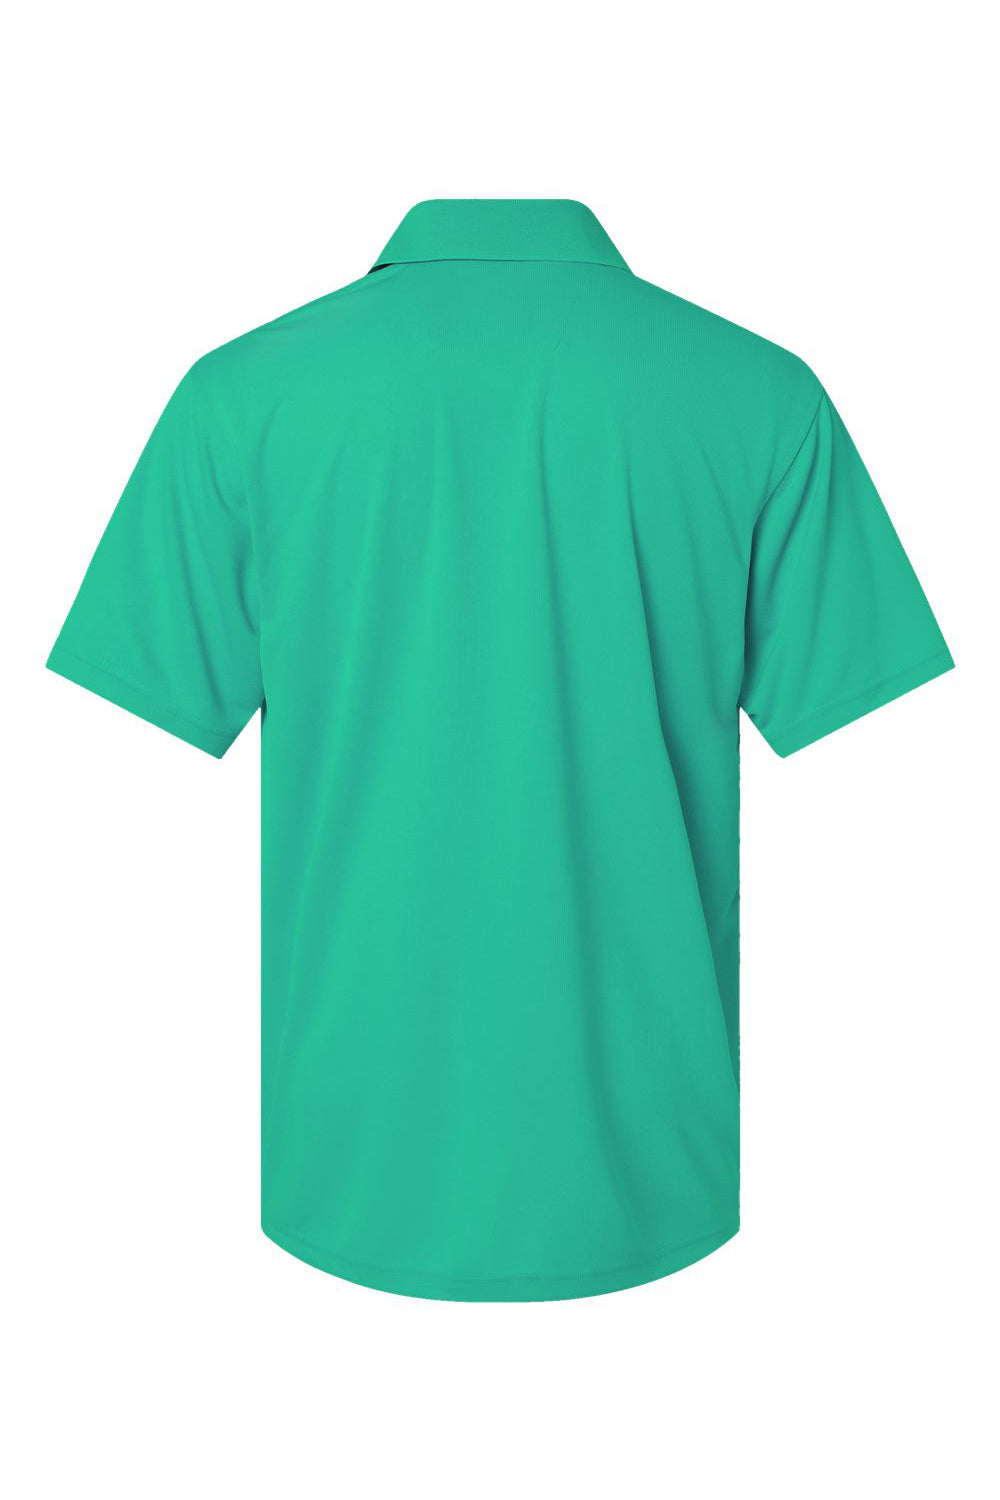 Paragon 100 Mens Saratoga Performance Mini Mesh Short Sleeve Polo Shirt Seagreen Flat Back